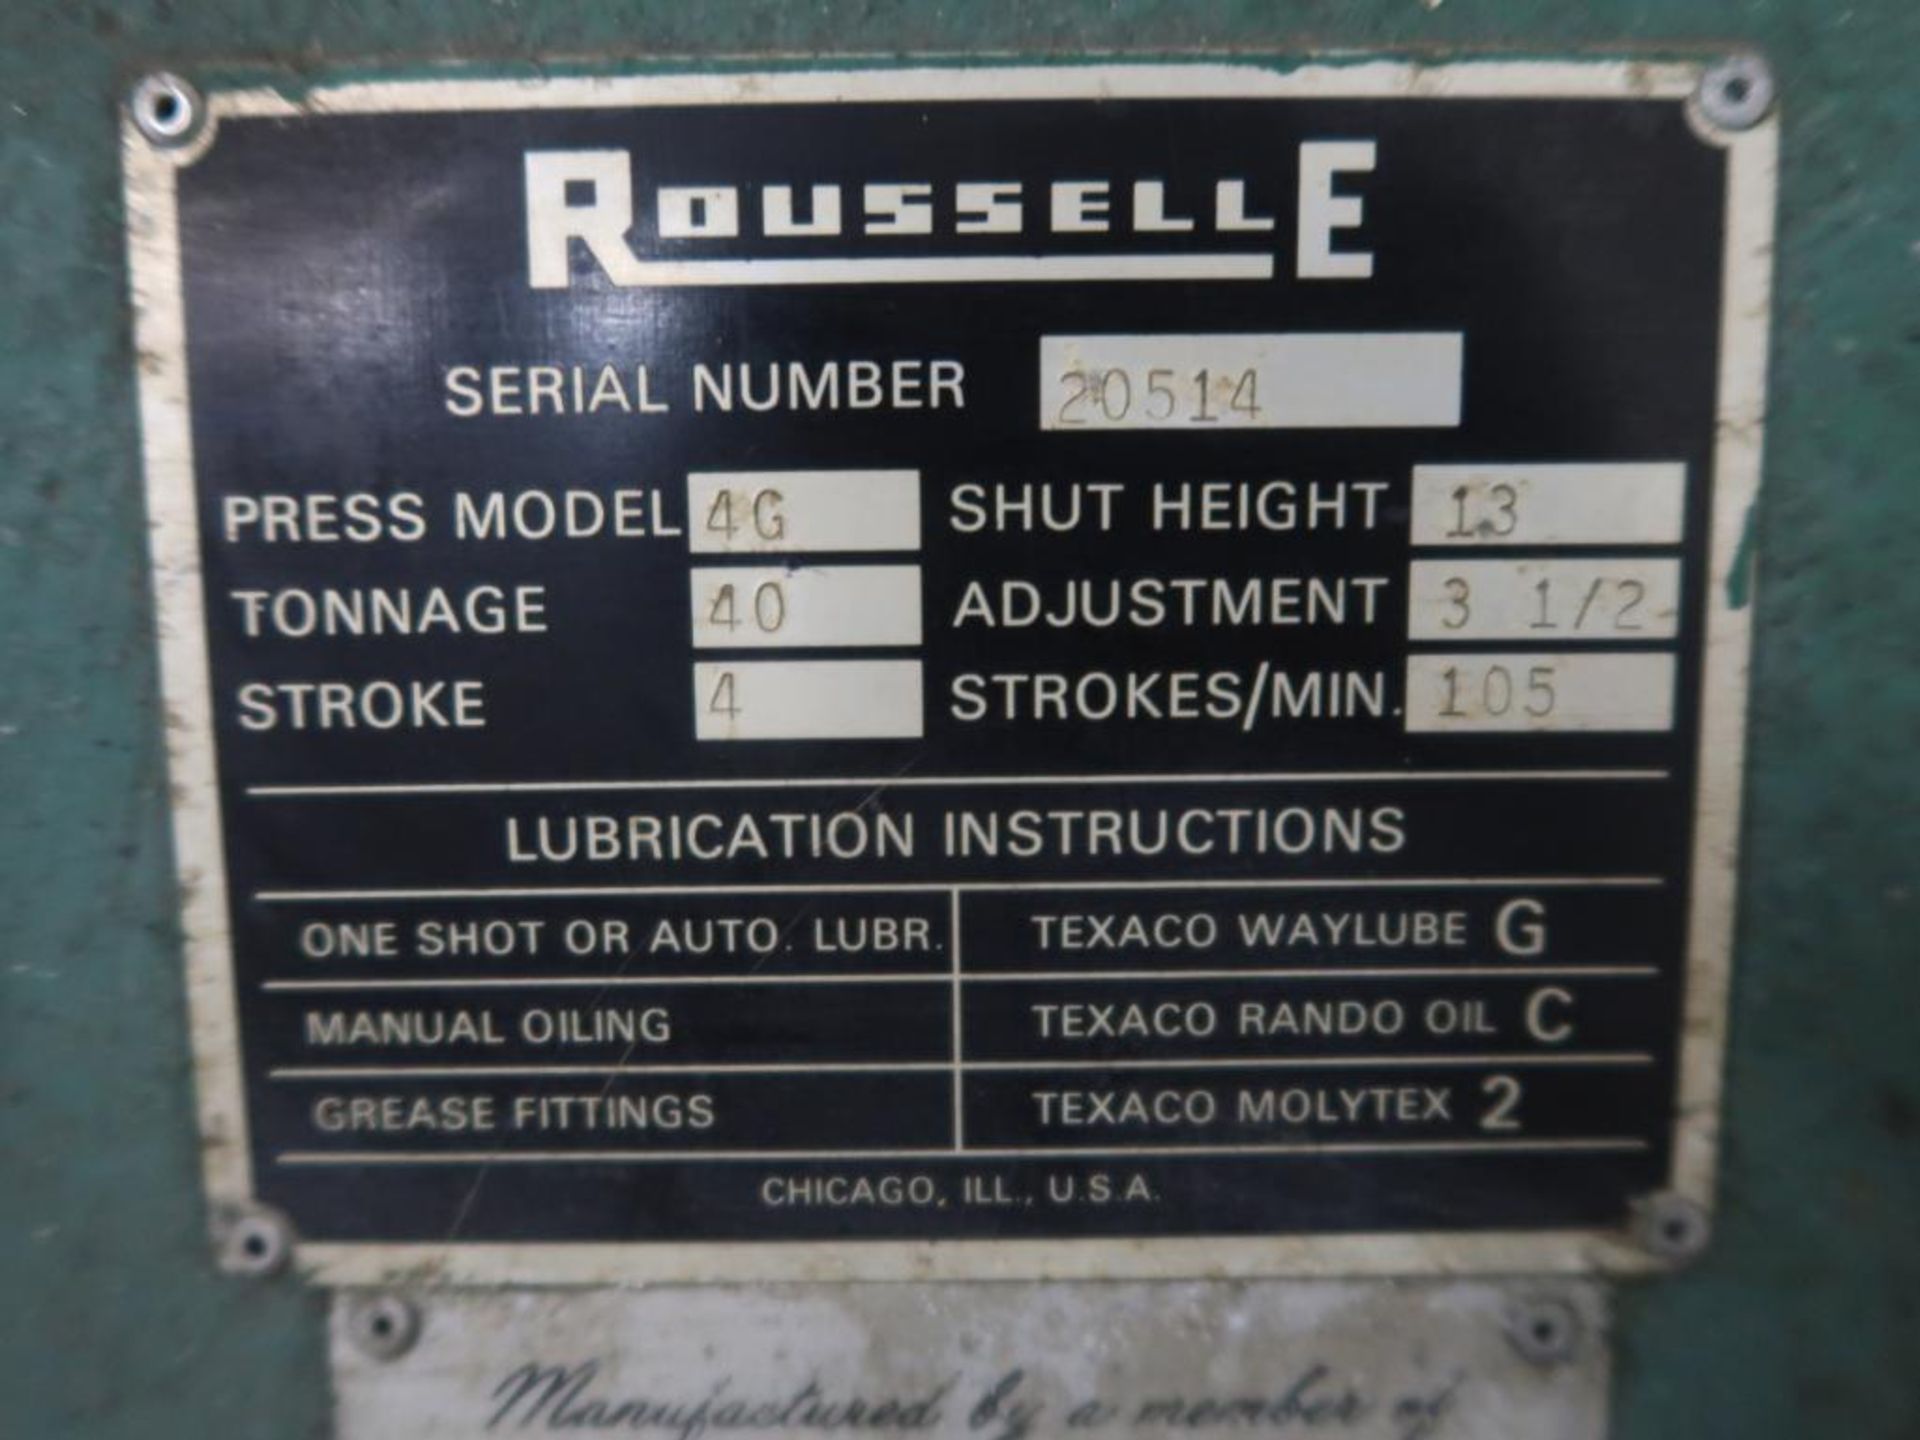 Rousselle 40 Ton Gap Press Model 4G, S/N 20514 (1982), 16 in. x 26 in. Bed, 24 in. Gap, 4 in. - Image 4 of 4